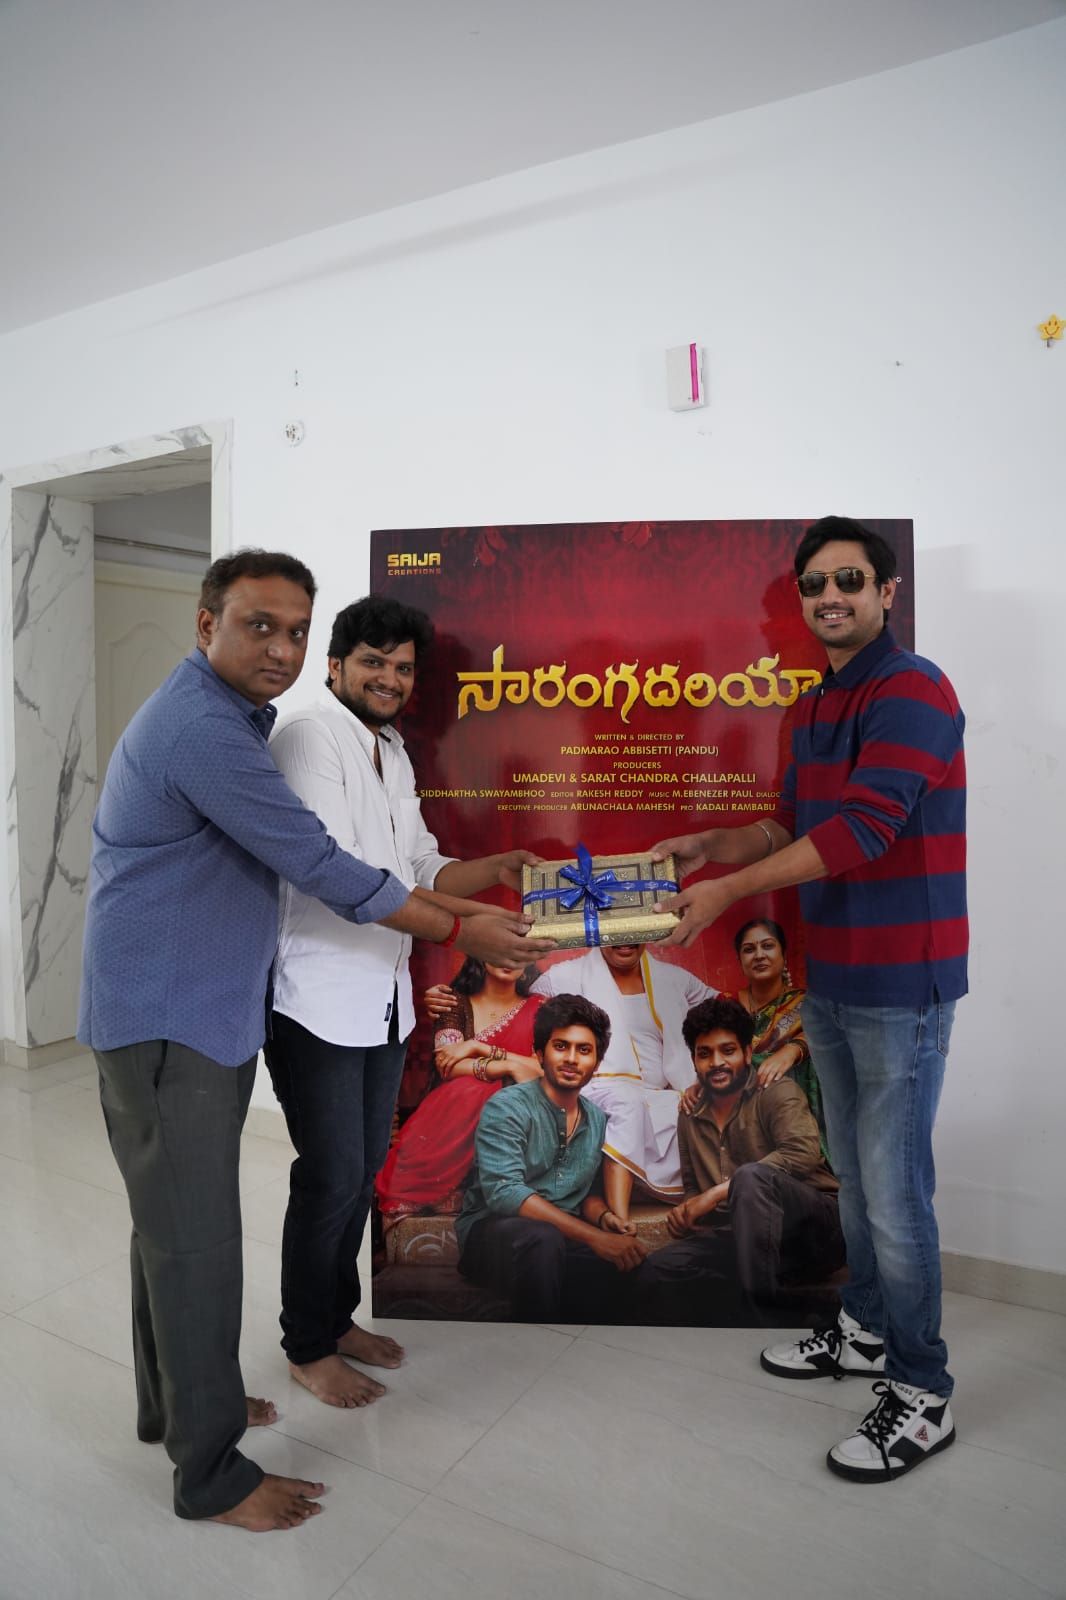 Sarangadariya Movie Title Poster Released